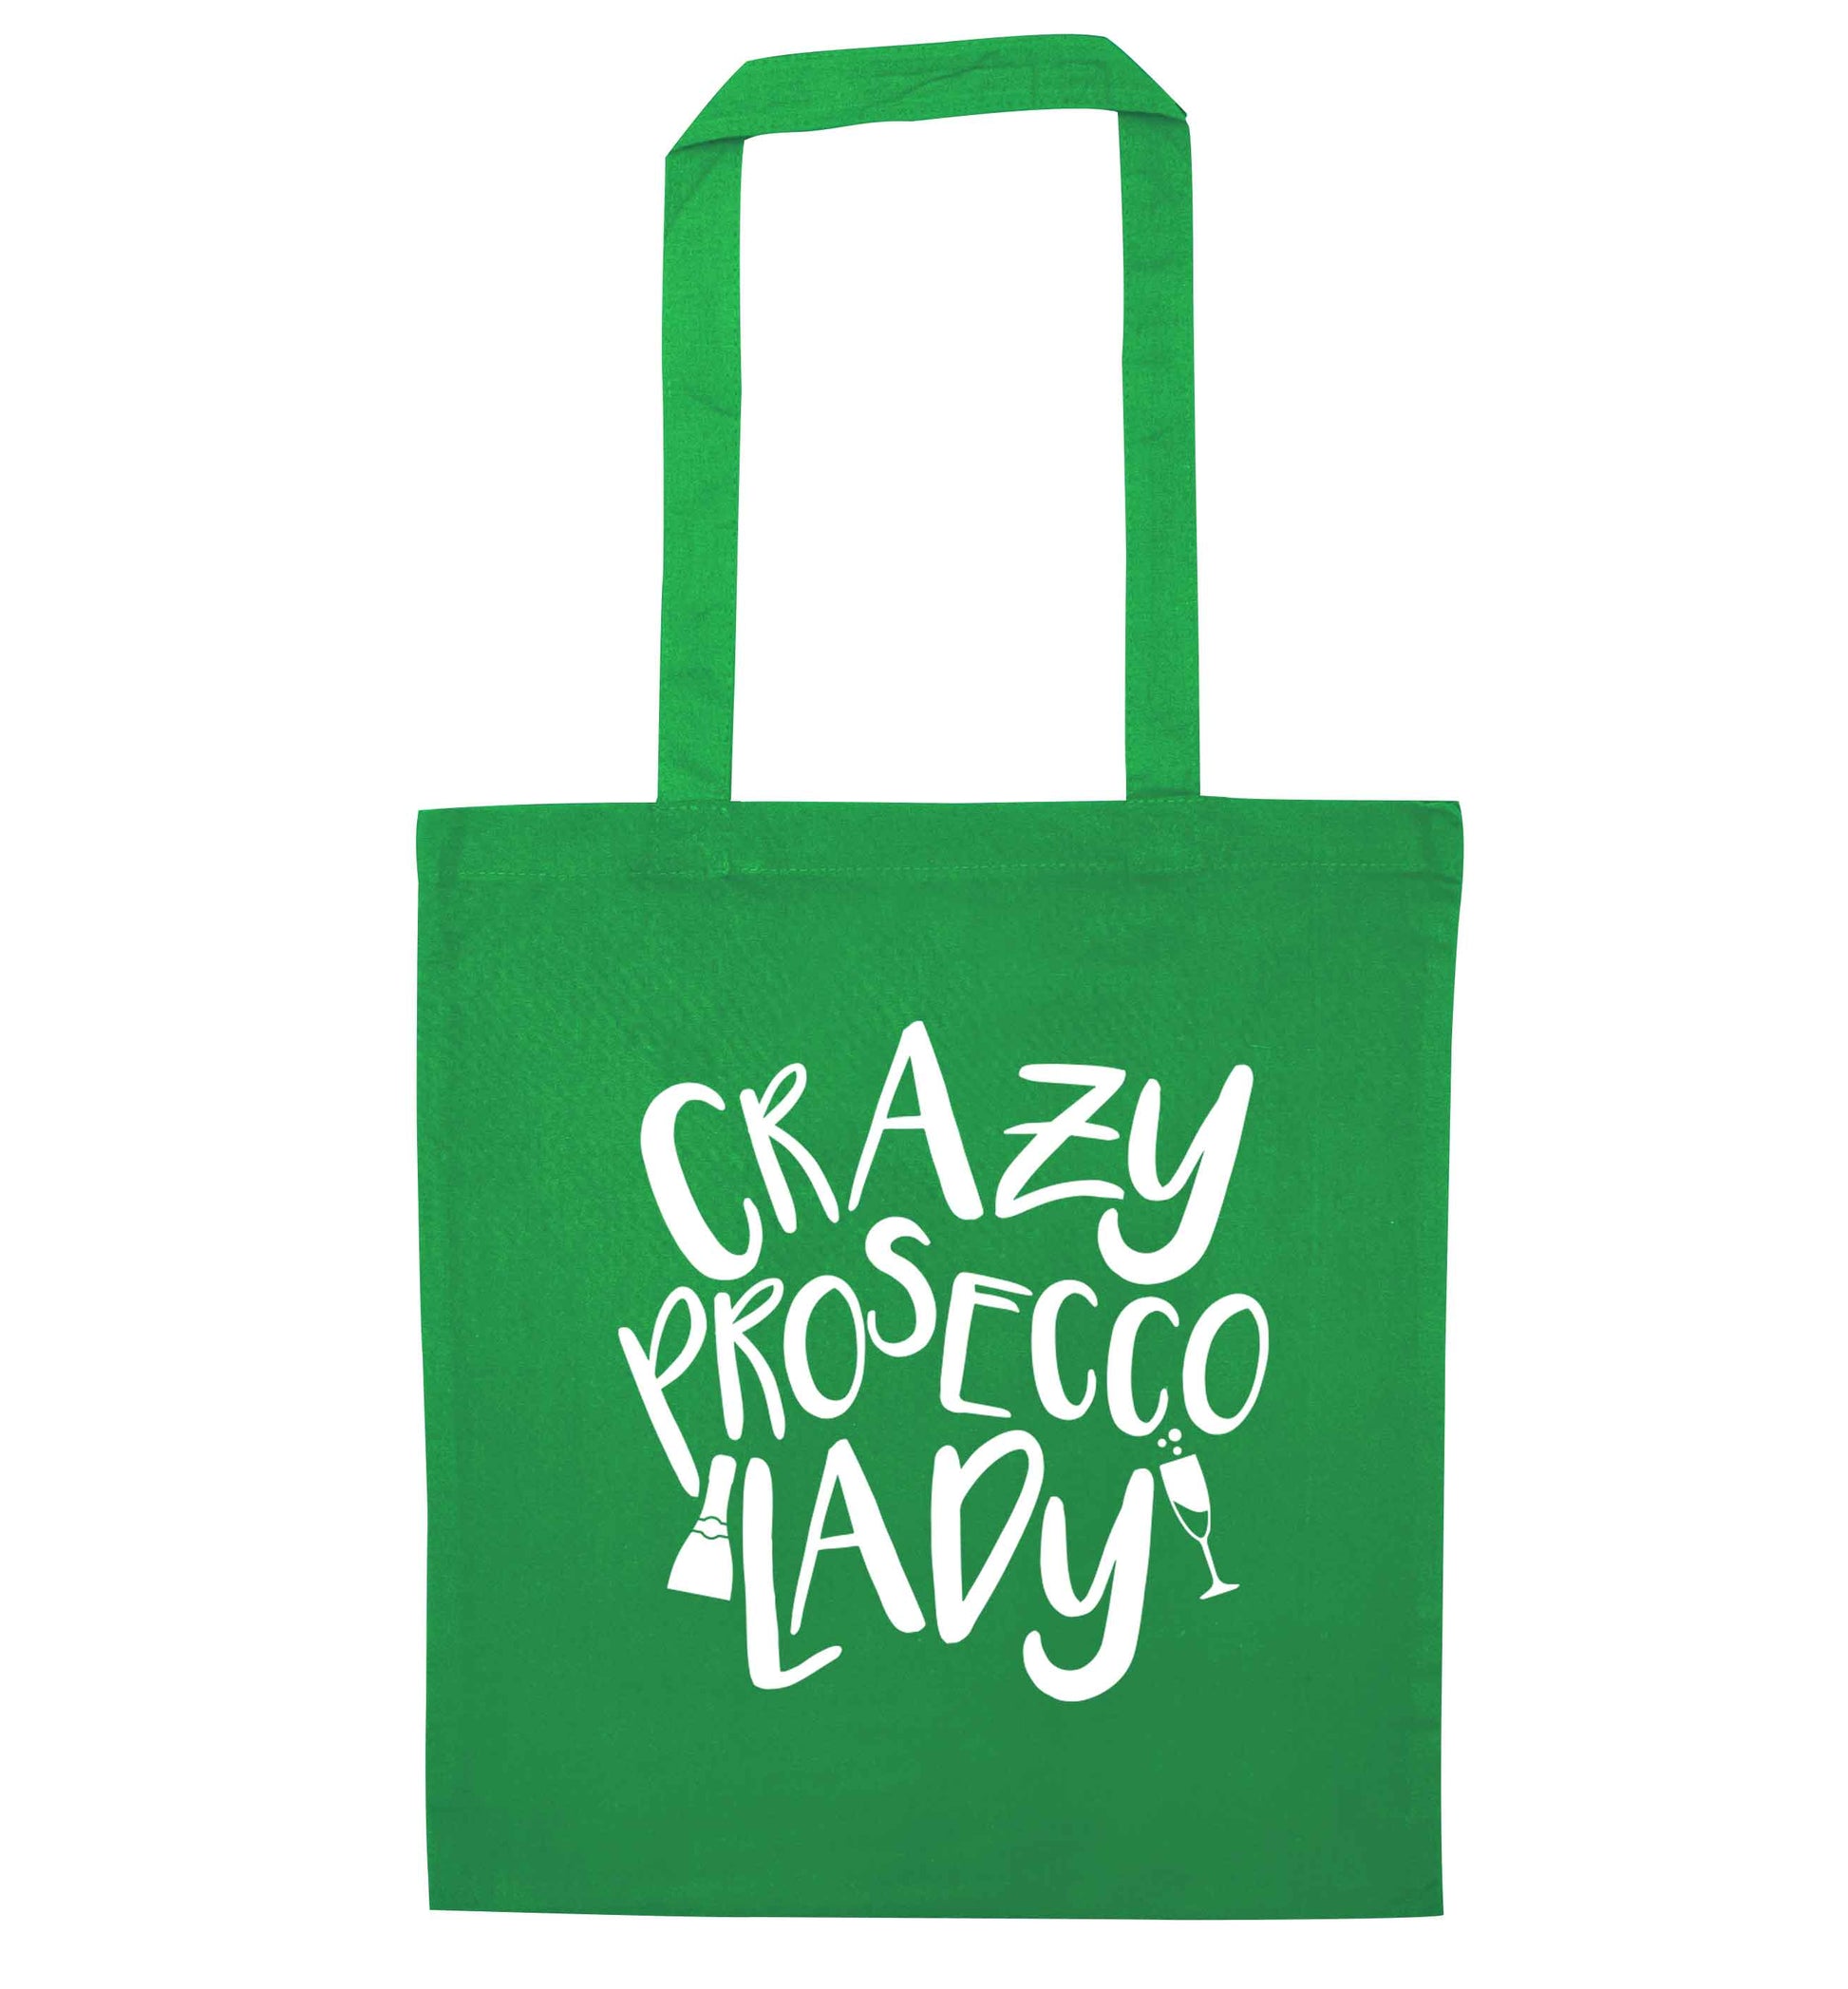 Crazy prosecco lady green tote bag